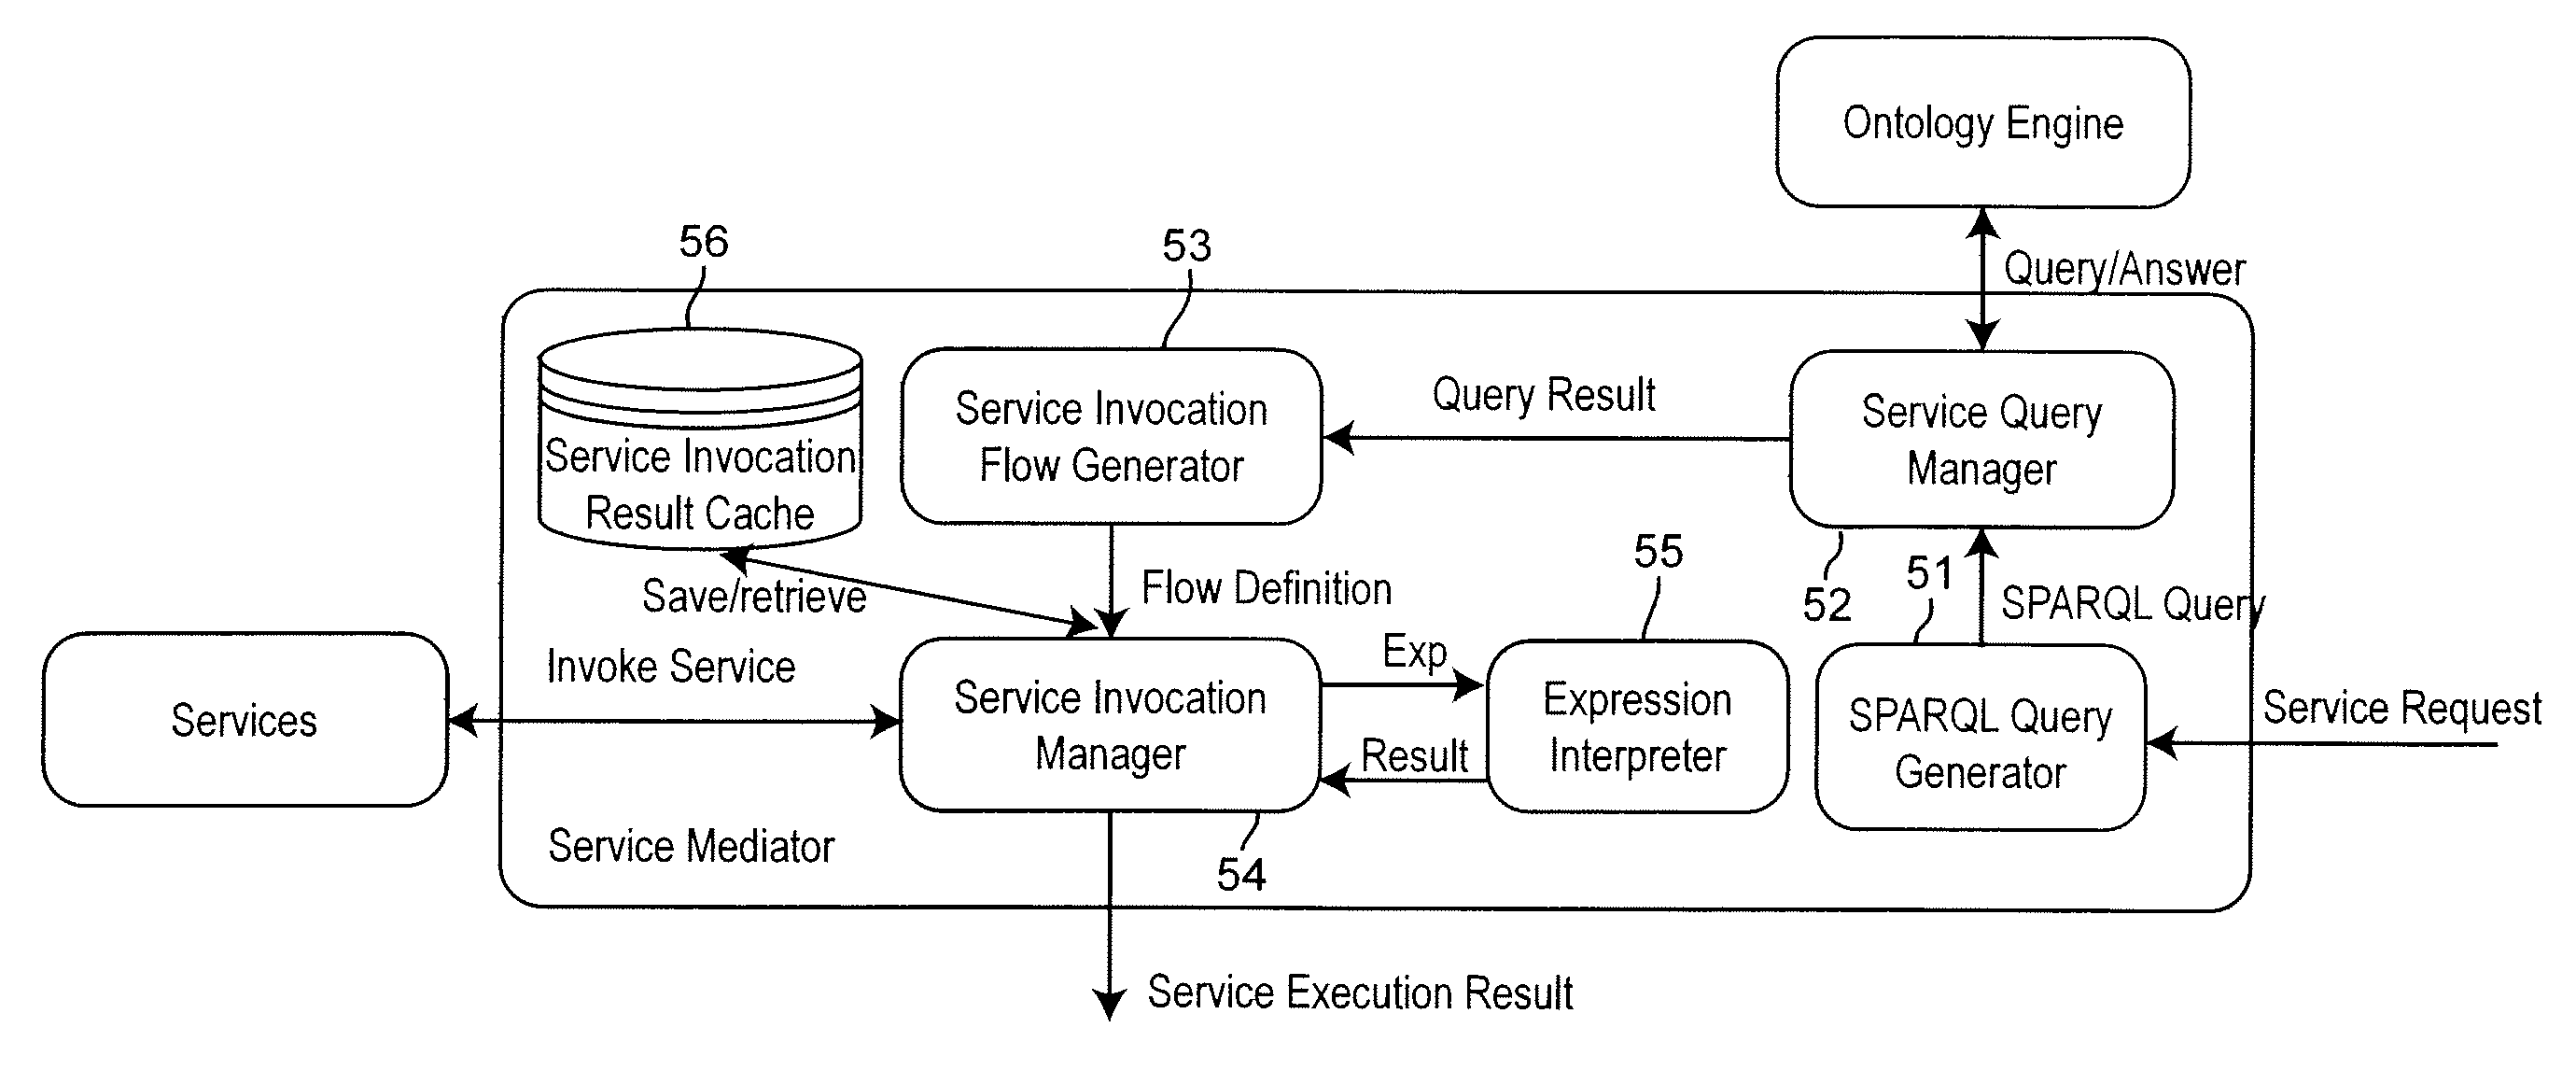 Apparatus and Method of Semantic Service Correlation System